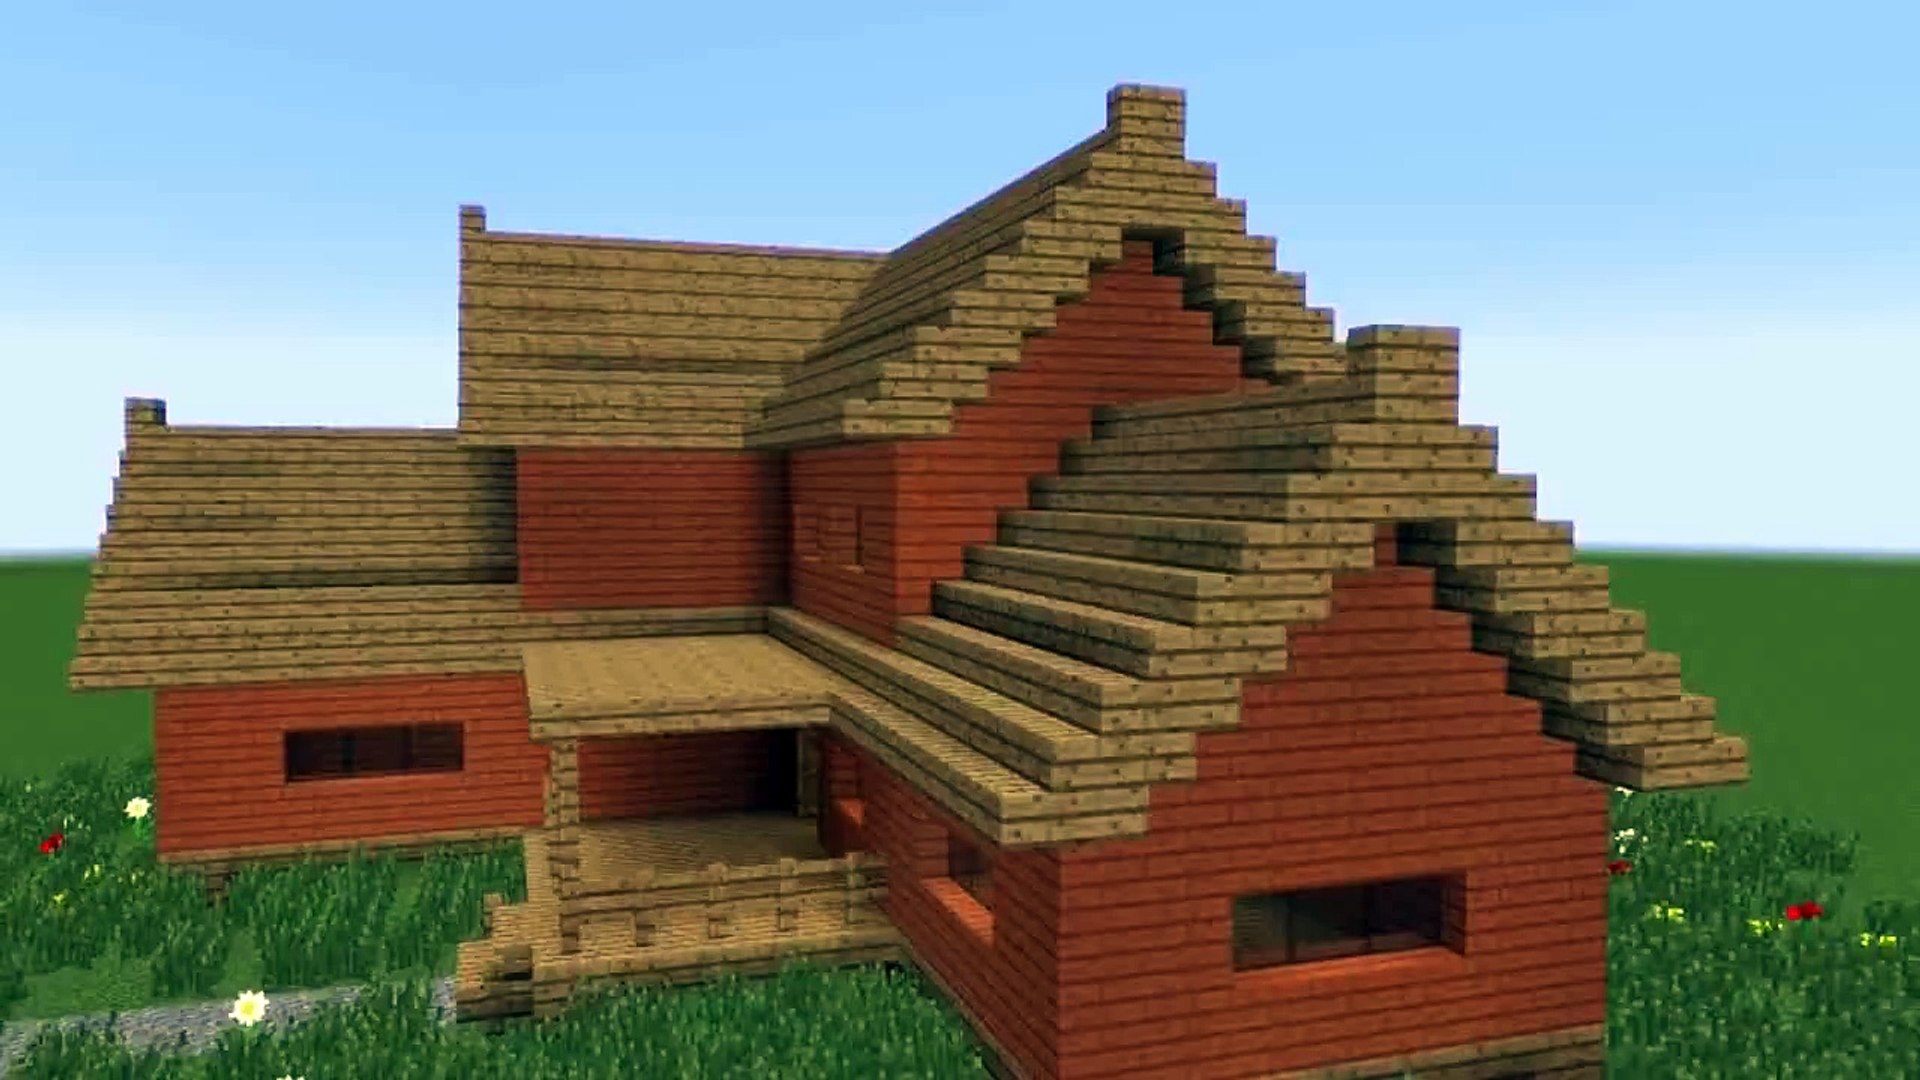 Minecraft House 2 ماين كرافت تصاميم بيوت 2 Video Dailymotion